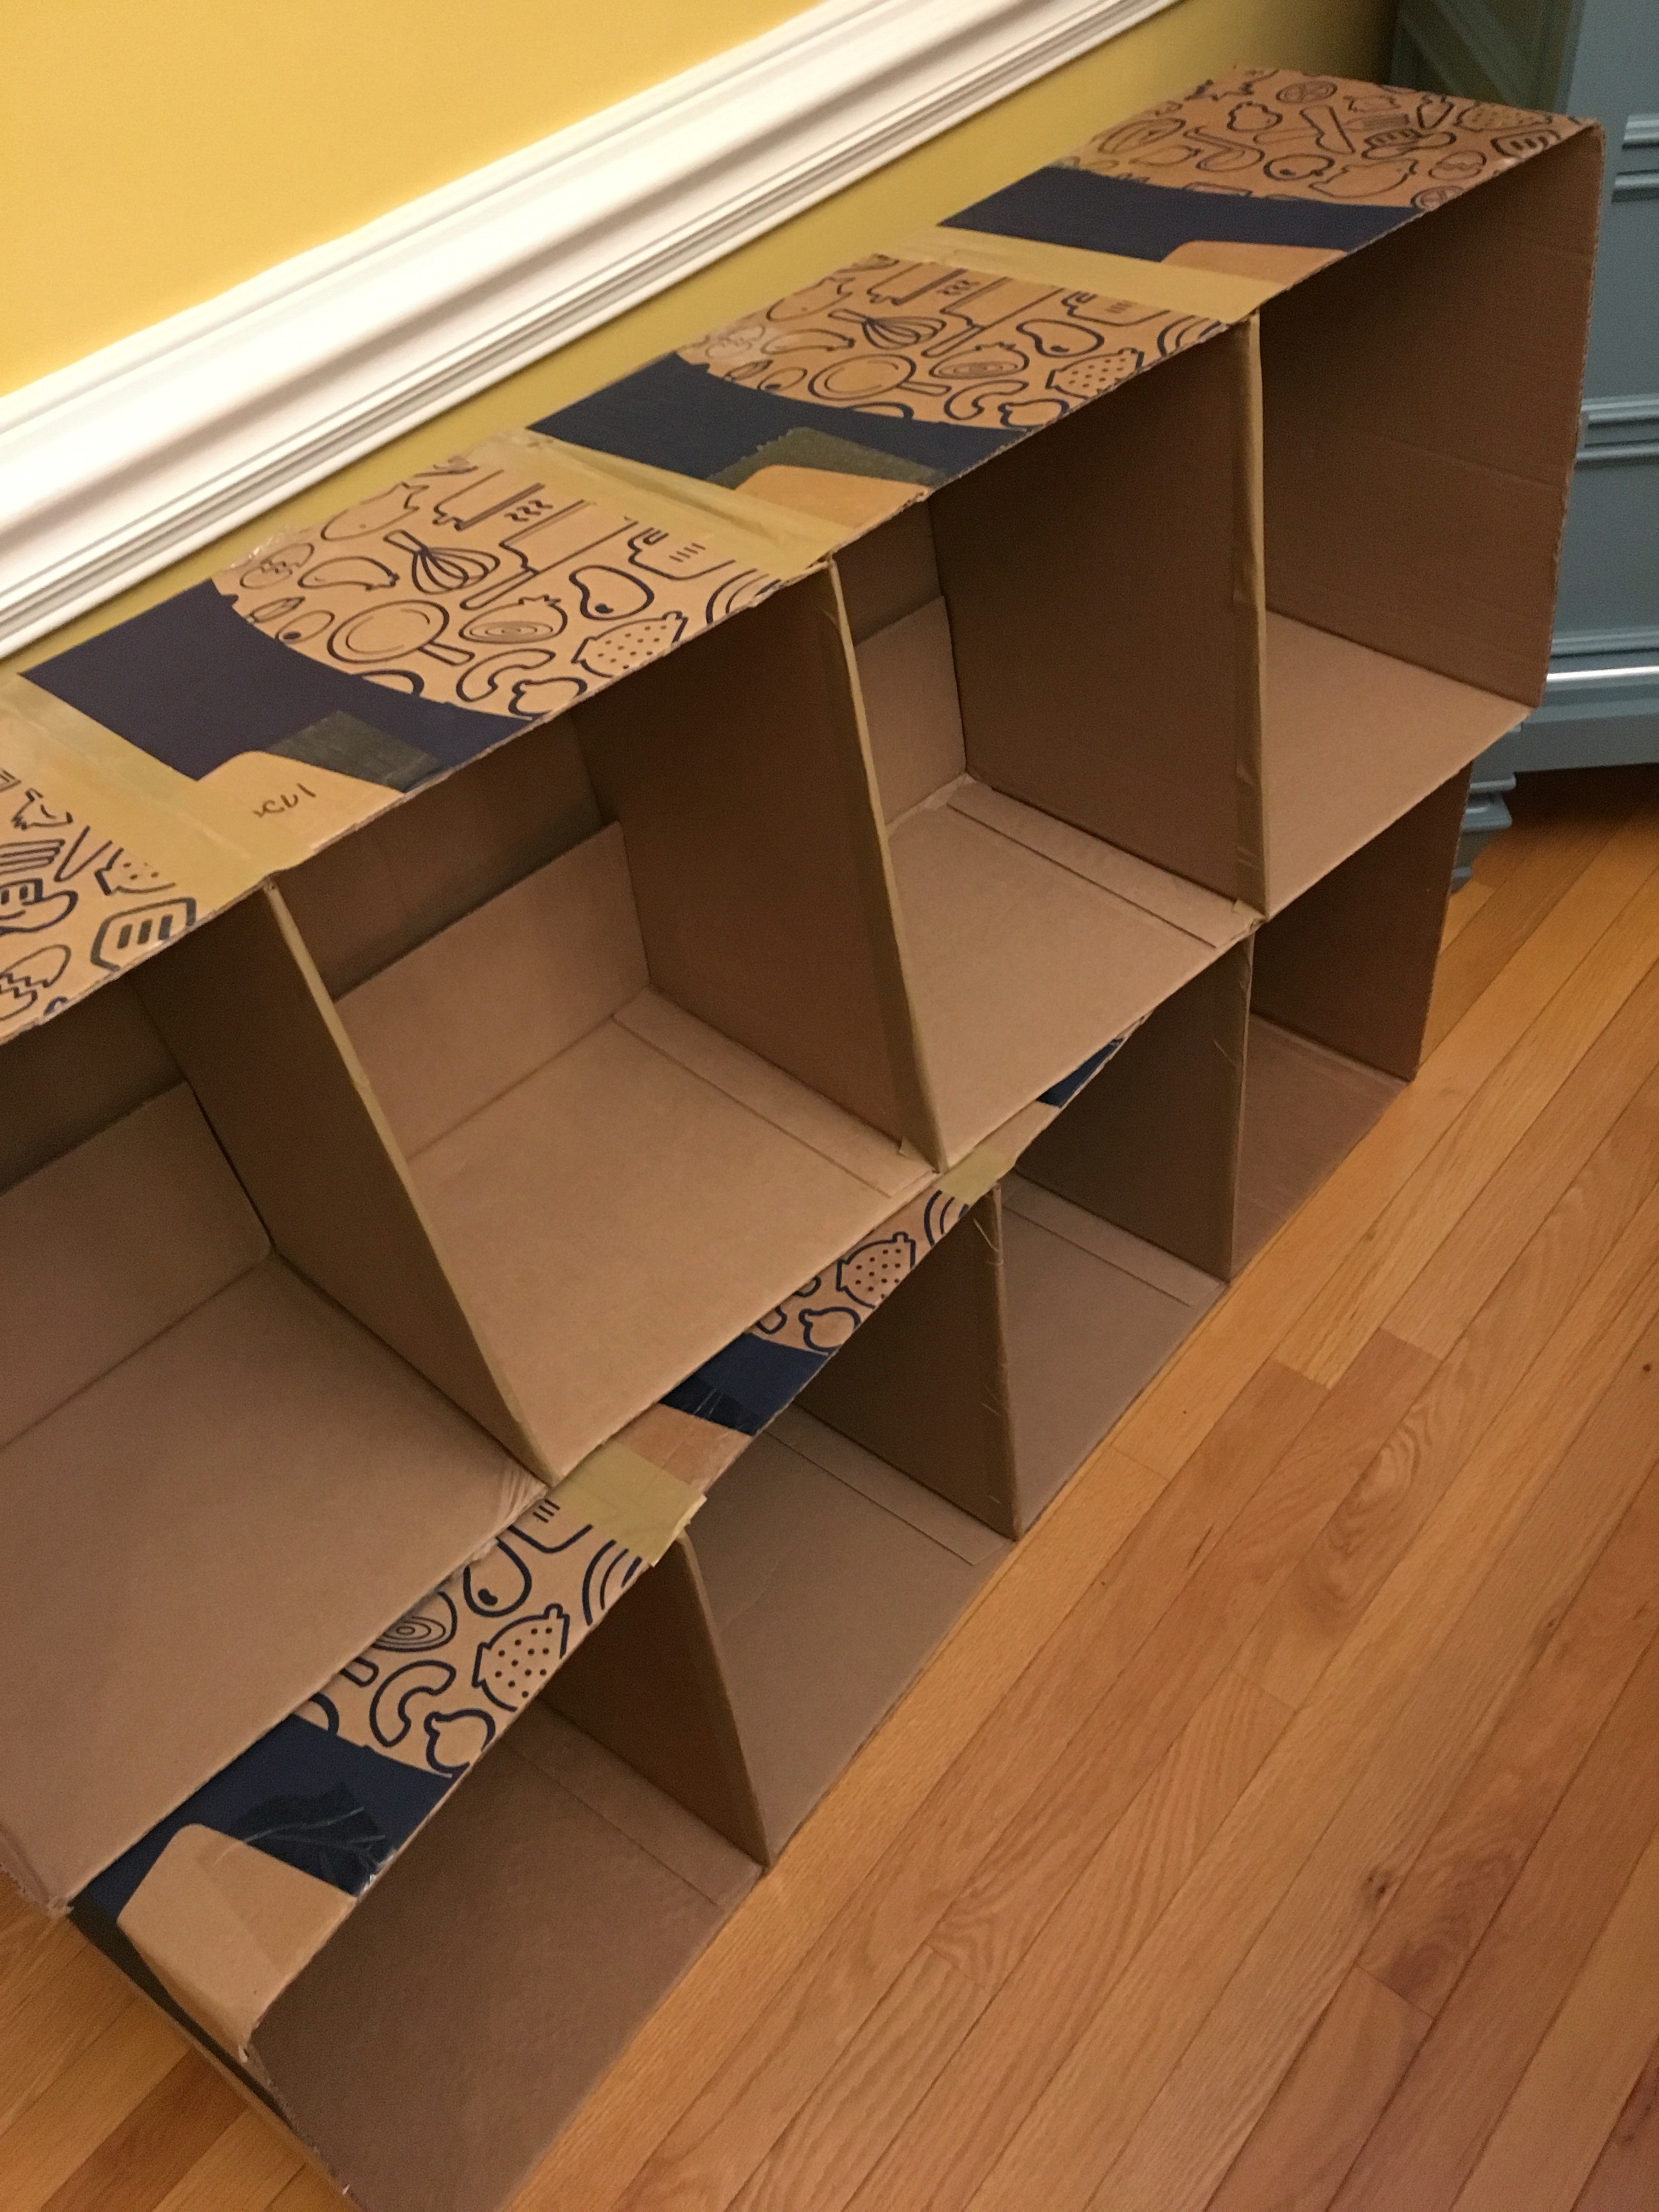 DIY Cardboard Box Shelves
 DIY Shelving from gasp Cardboard Boxes – A Bunch of Craft